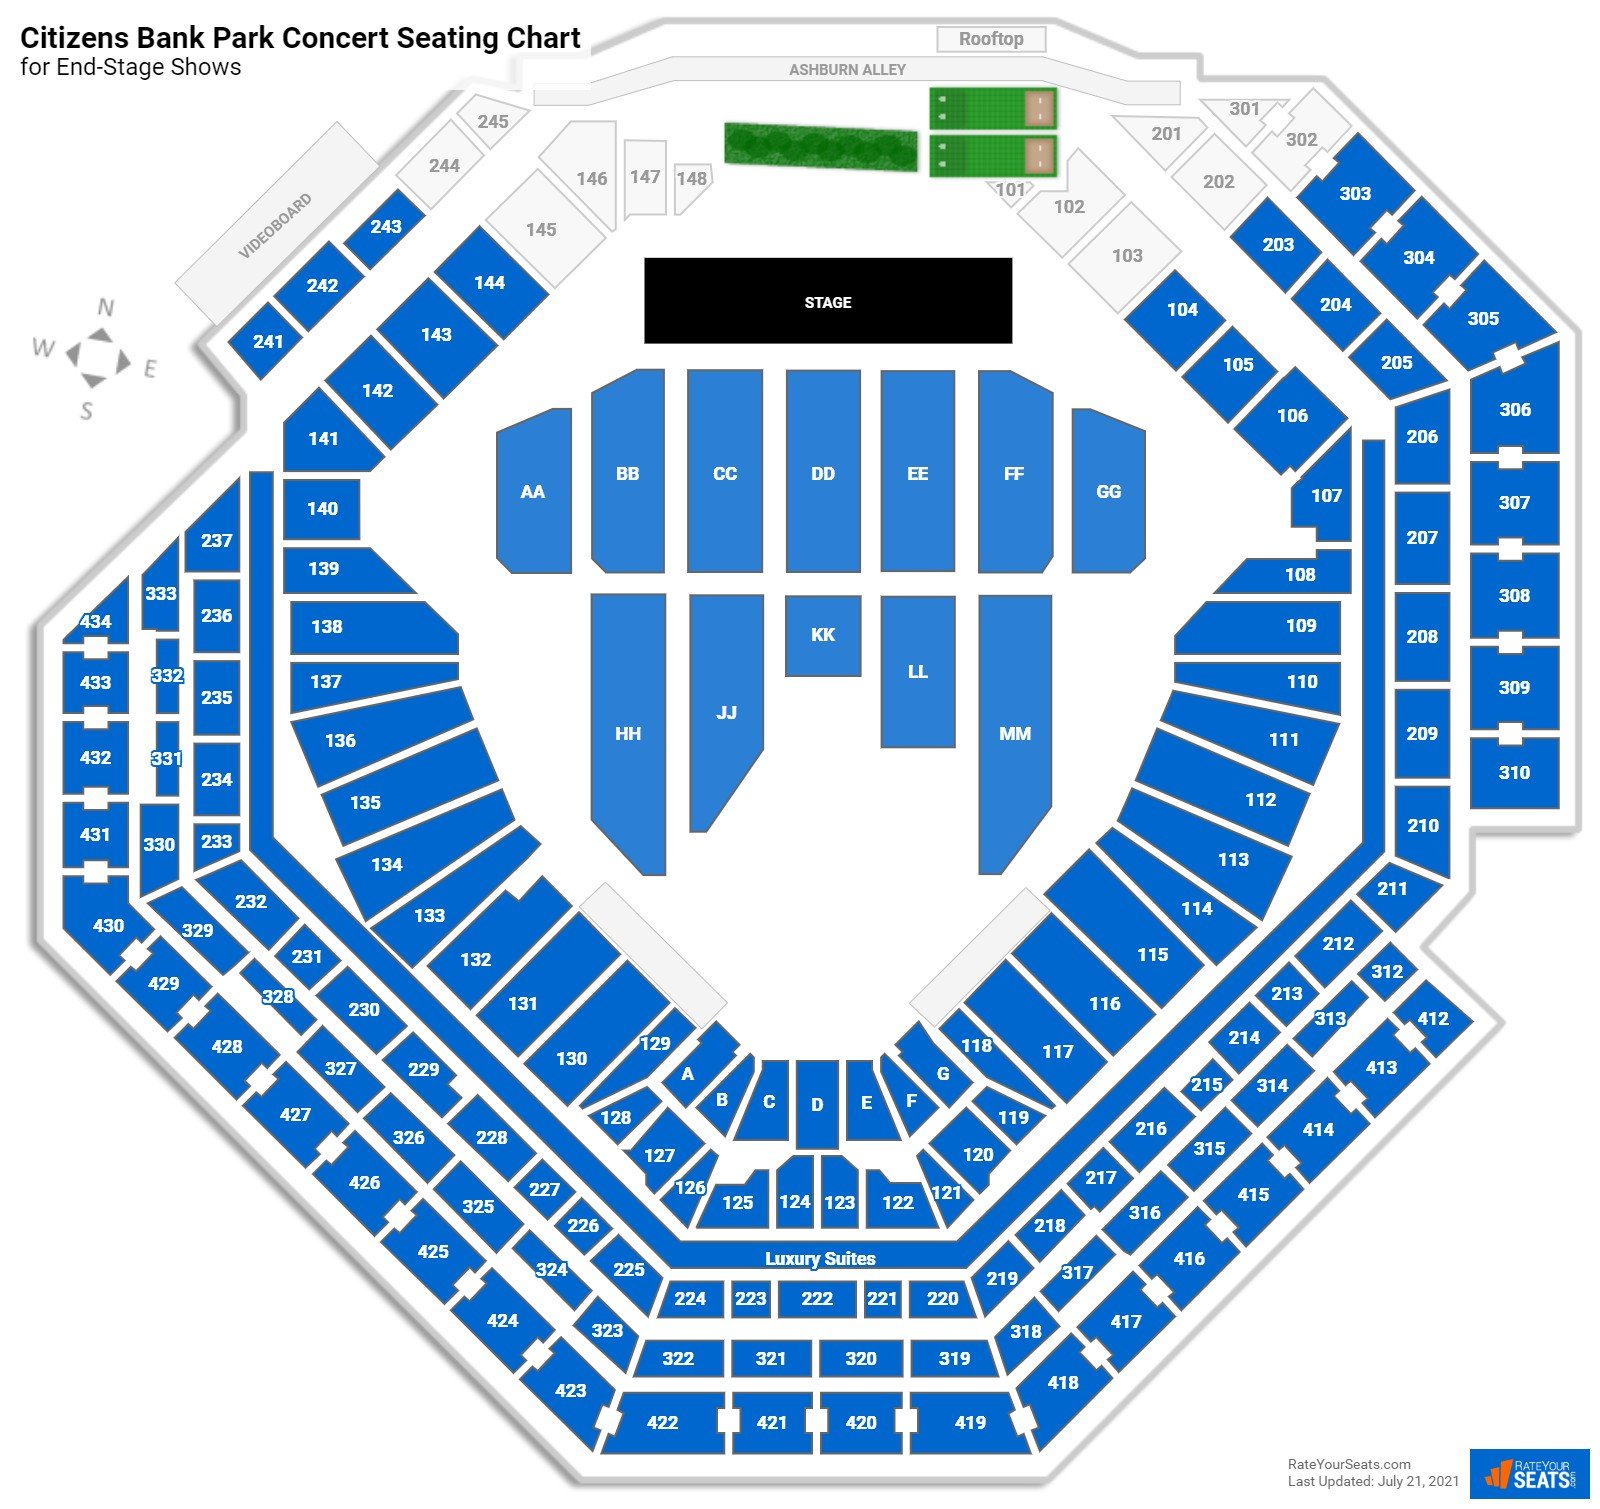 Citizens Bank Park Concert Seating Chart